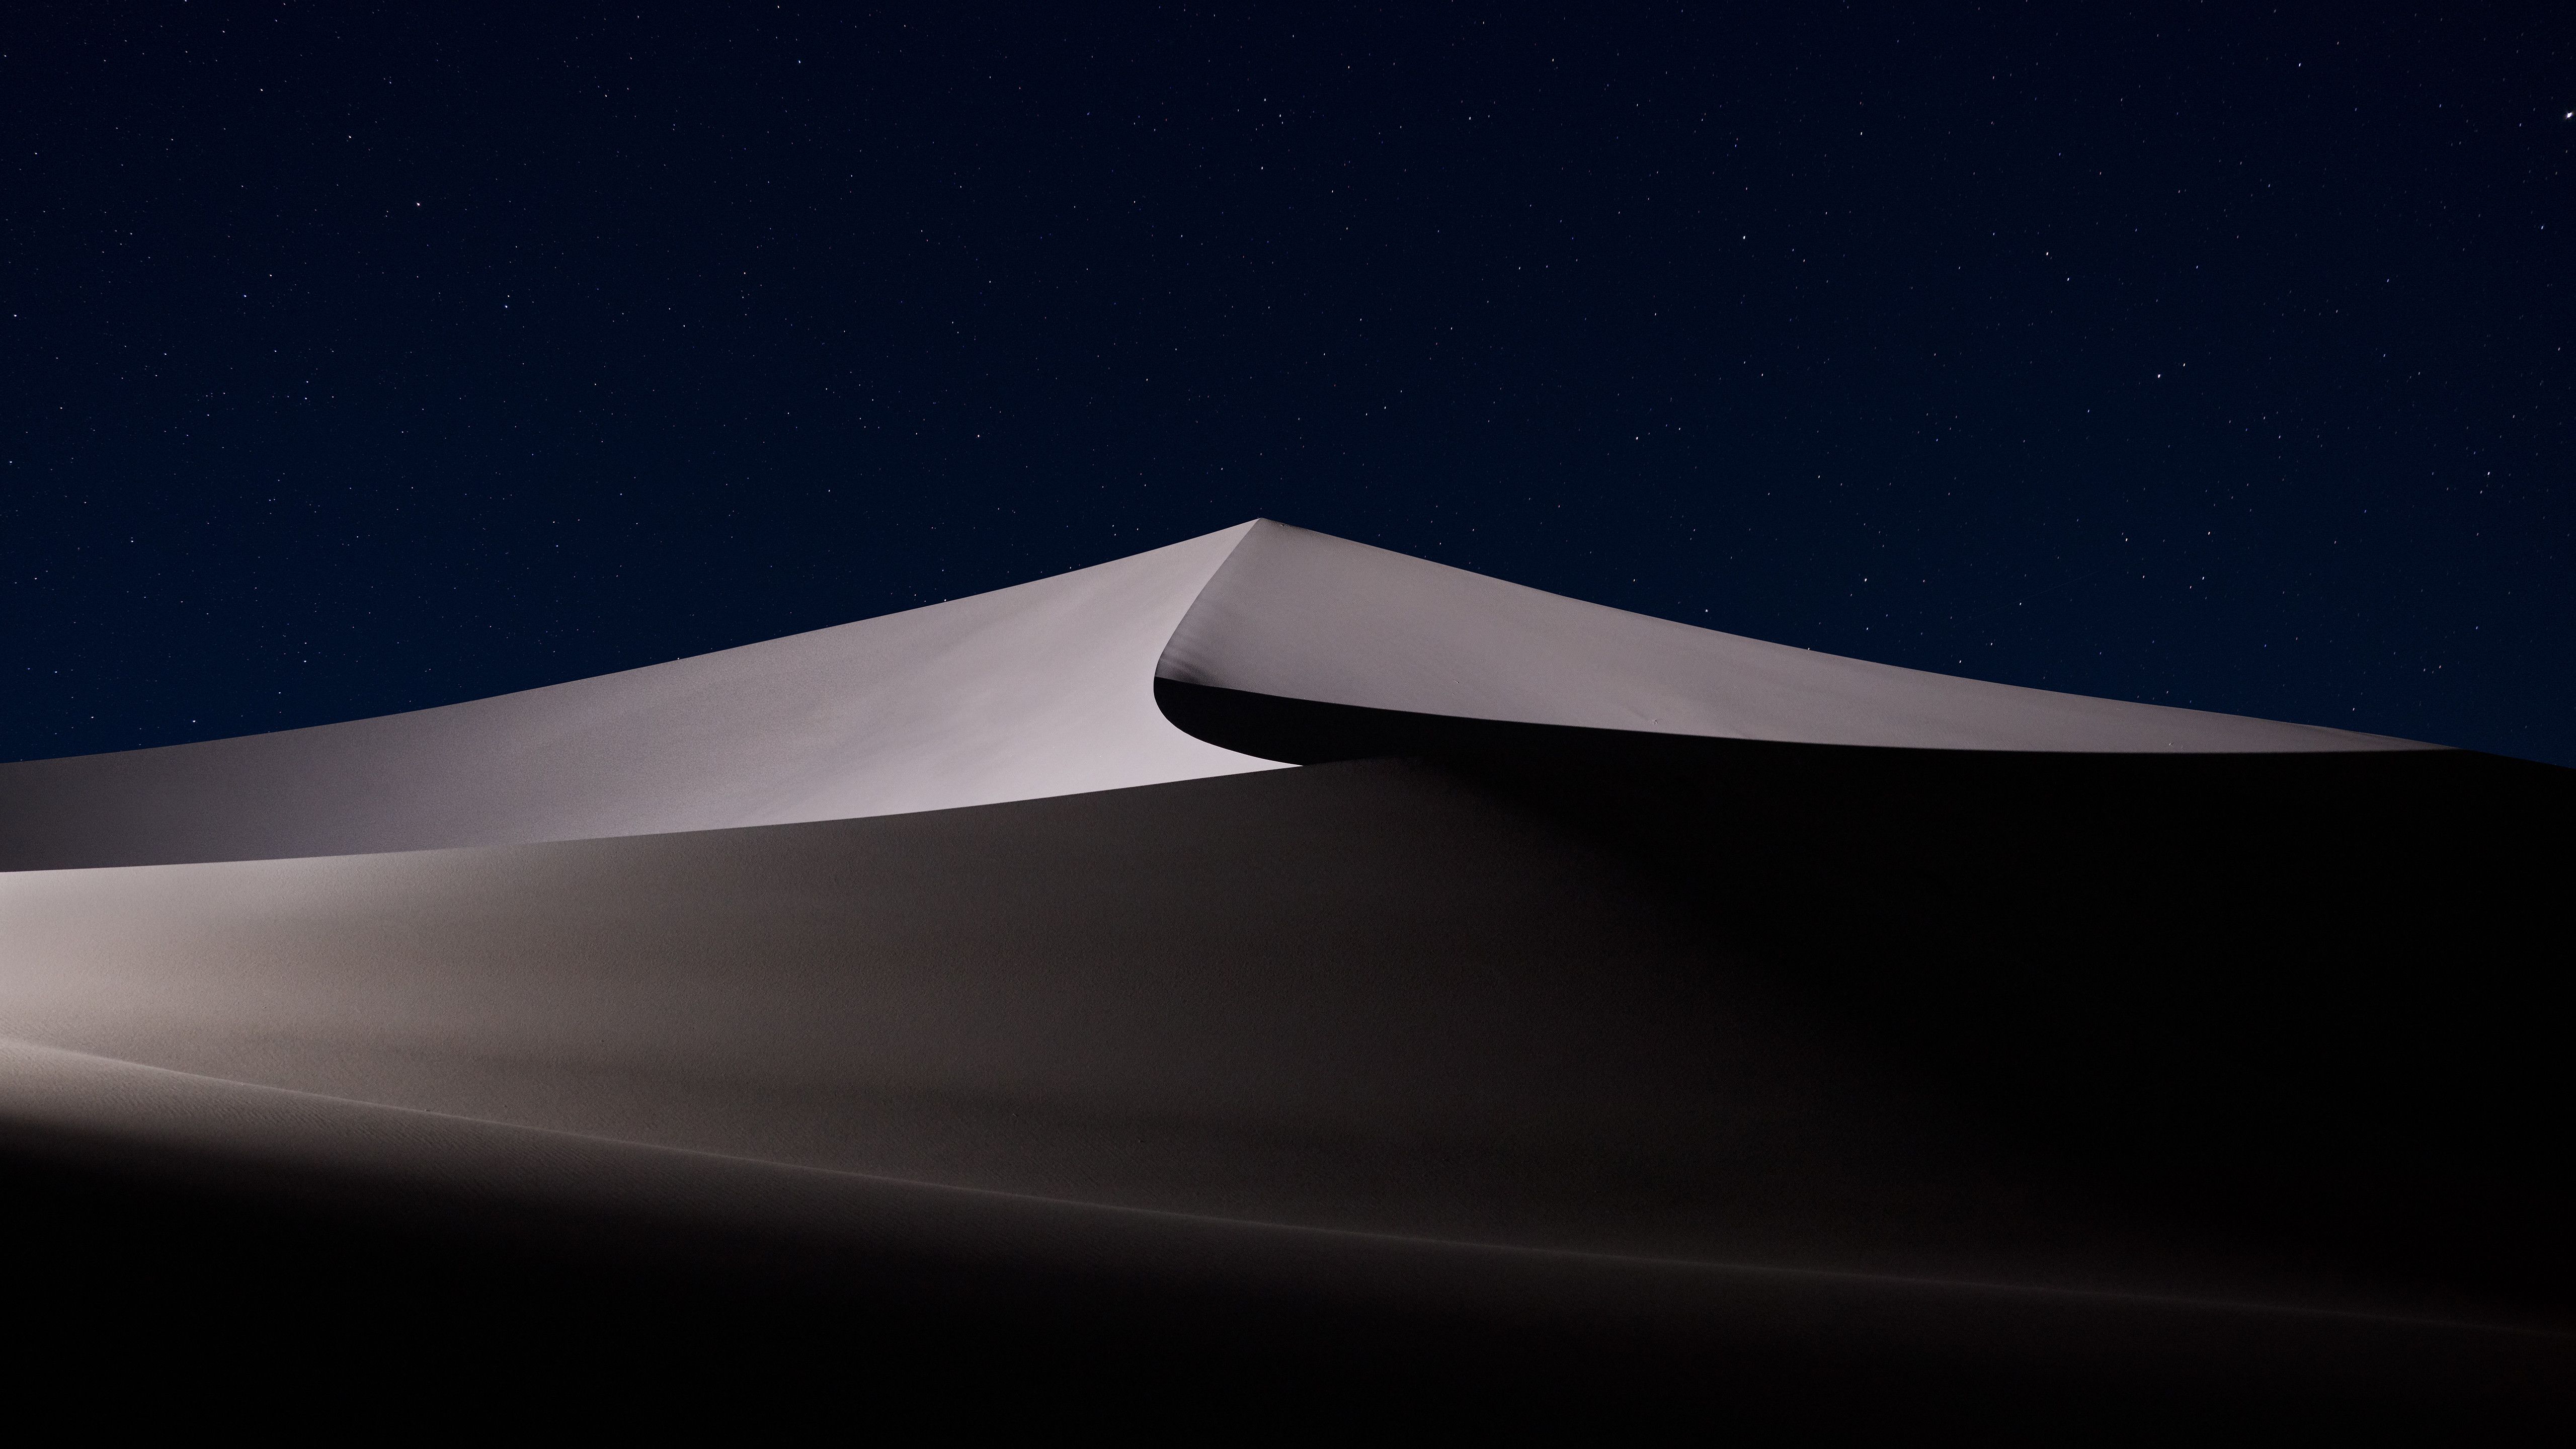 Desert Night MacOS Mojave 5k 5k HD 4k Wallpaper, Image